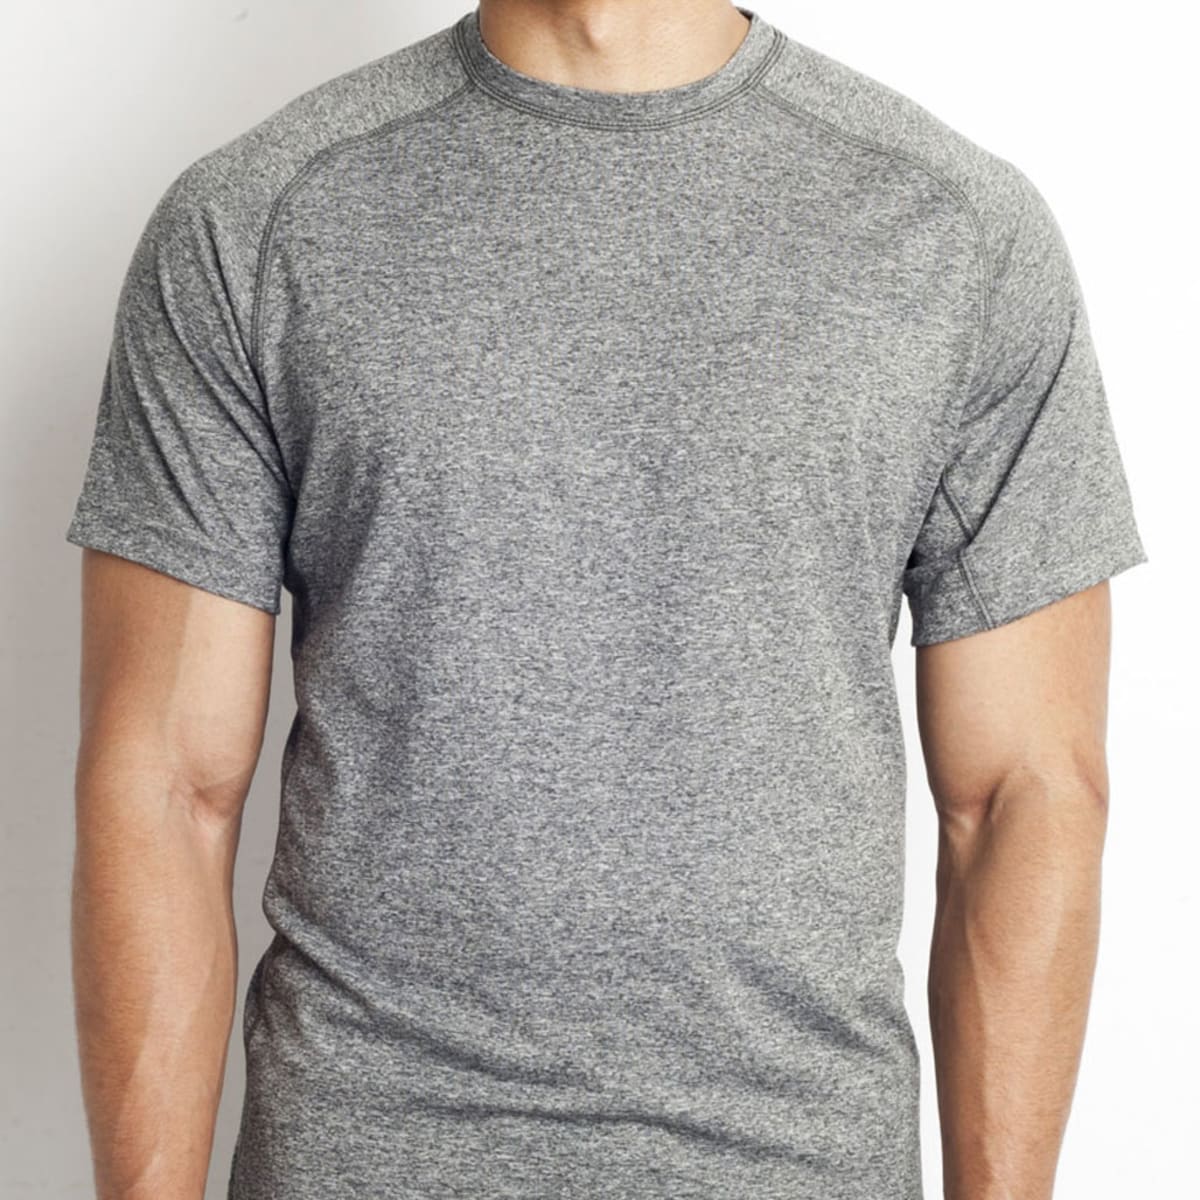 Boodschapper Lijkenhuis climax 10 Best Muscle Fit T-Shirts - Men's Journal